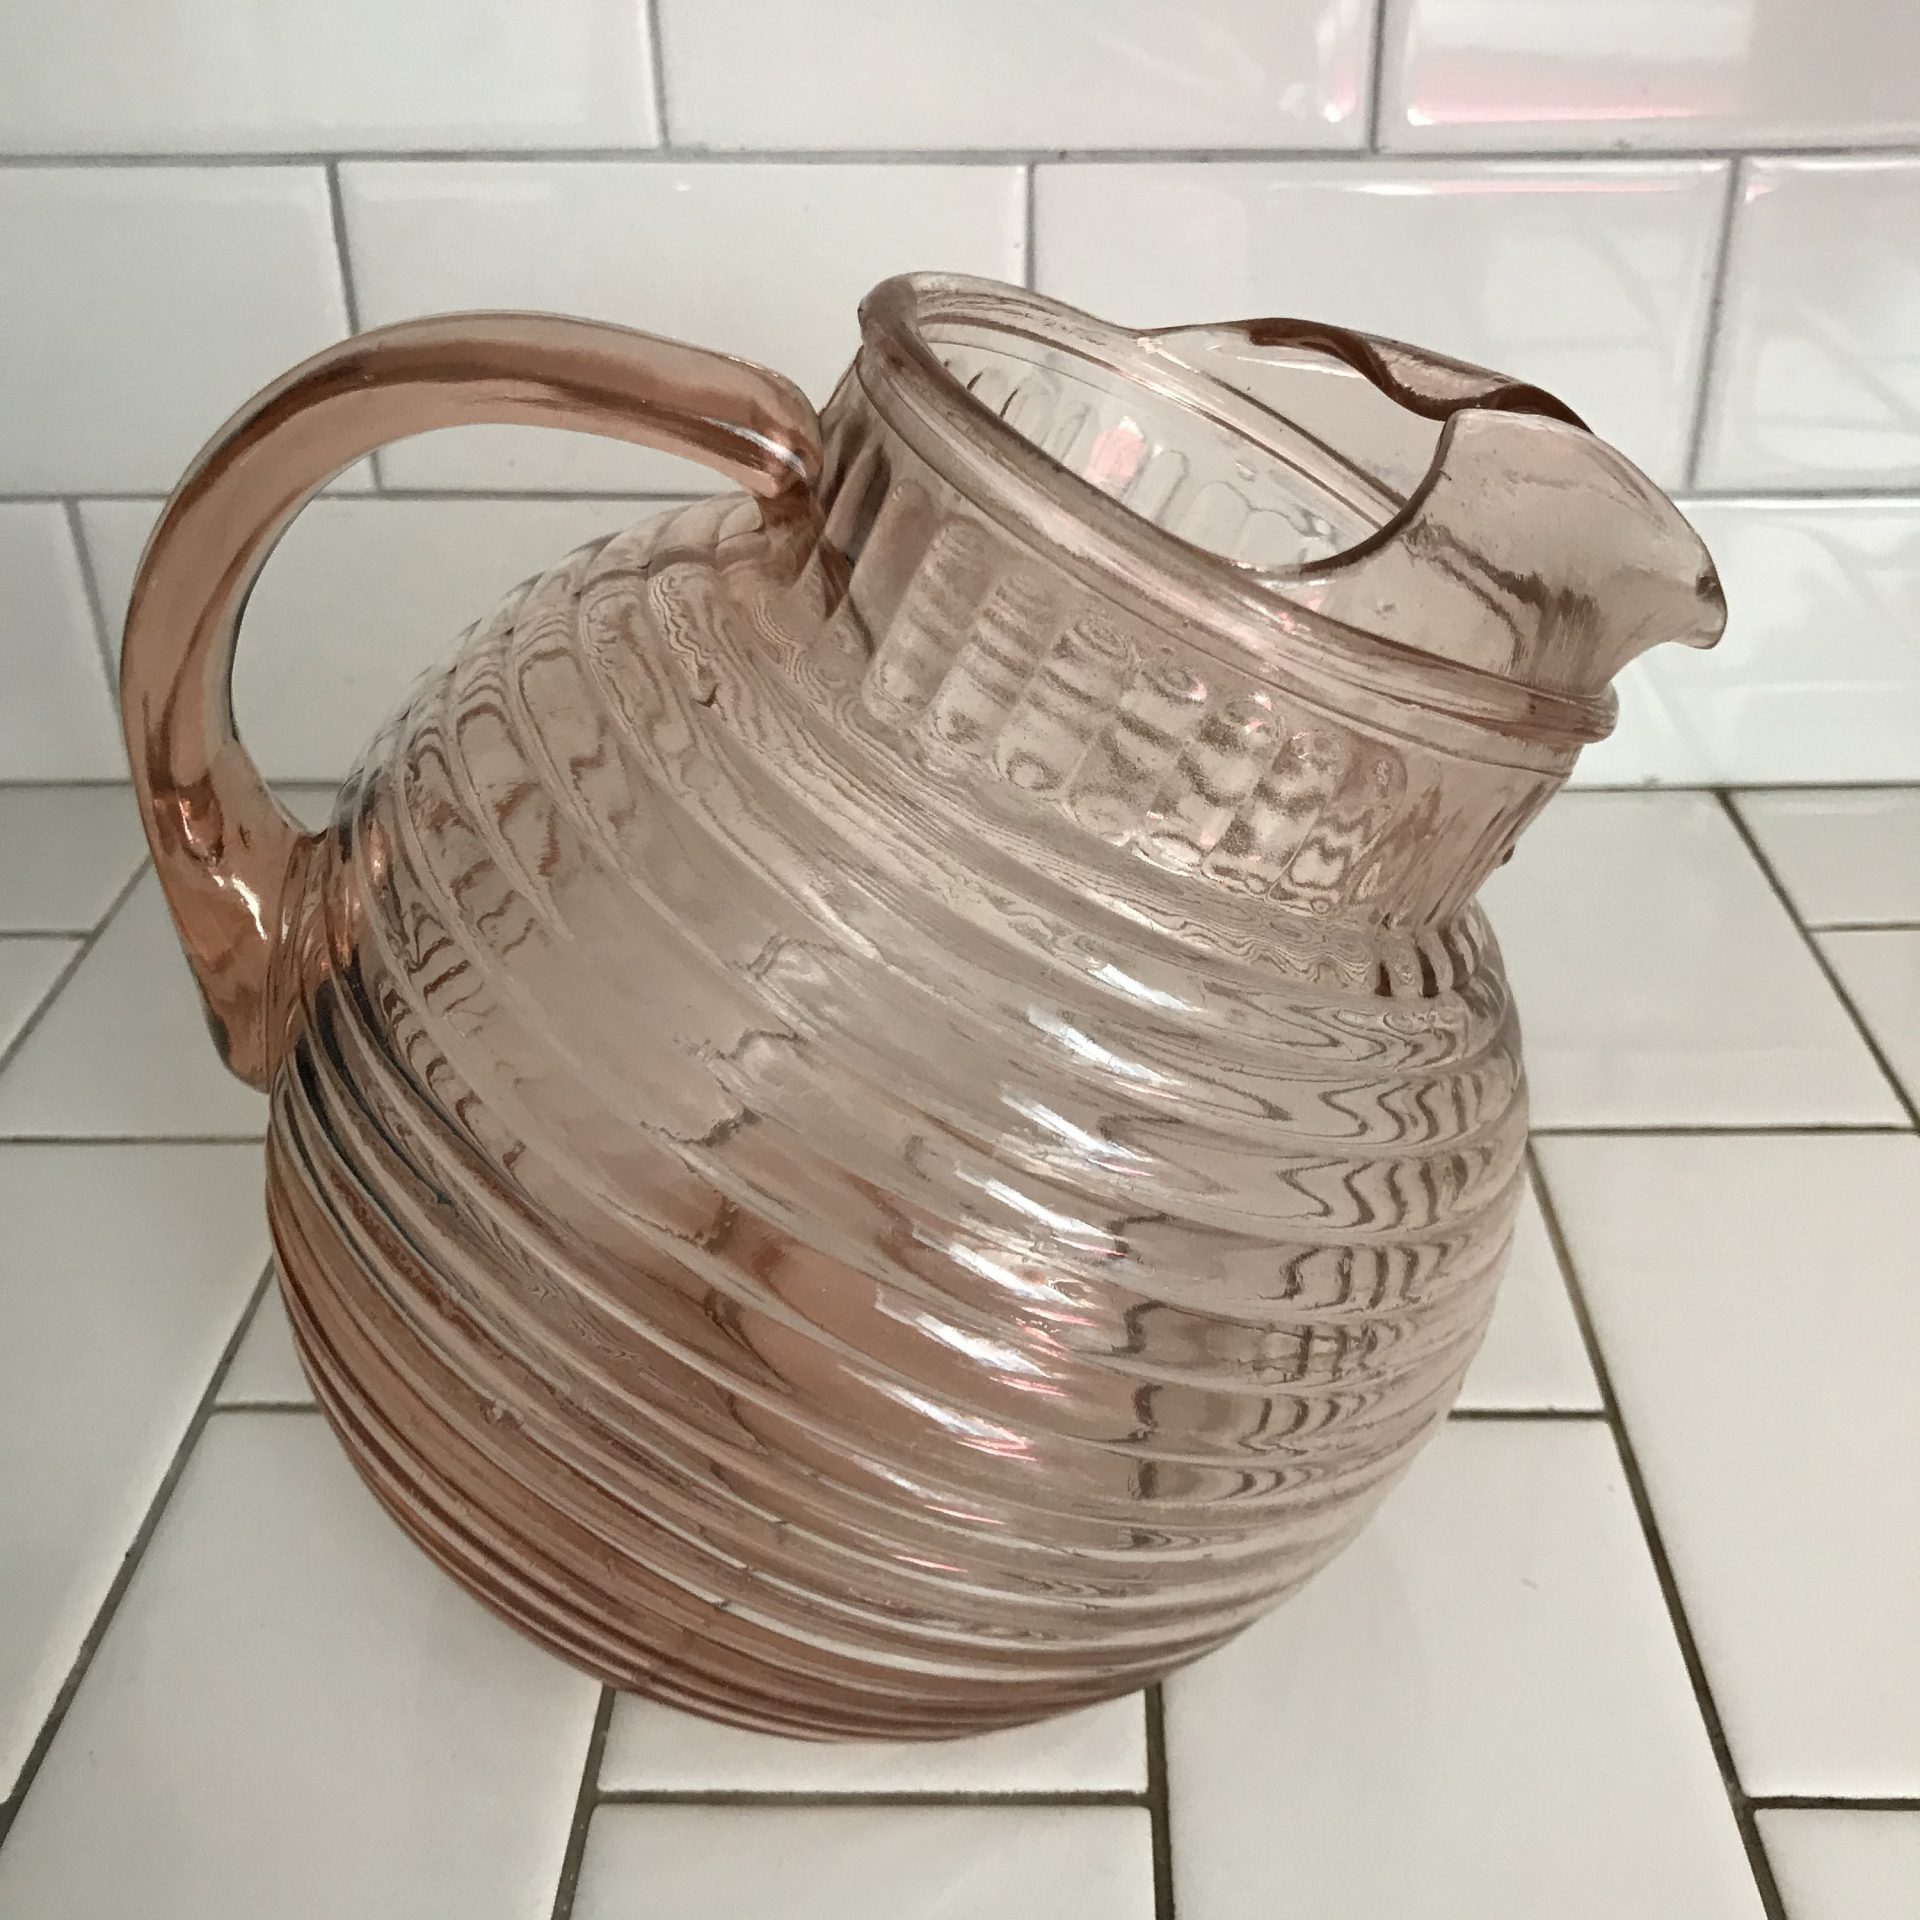 https://www.truevintageantiques.com/wp-content/uploads/2021/05/vintage-tilt-ball-pitcher-pink-ribbed-glass-depression-era-collectible-display-farmhouse-cottage-60990b431-scaled.jpg